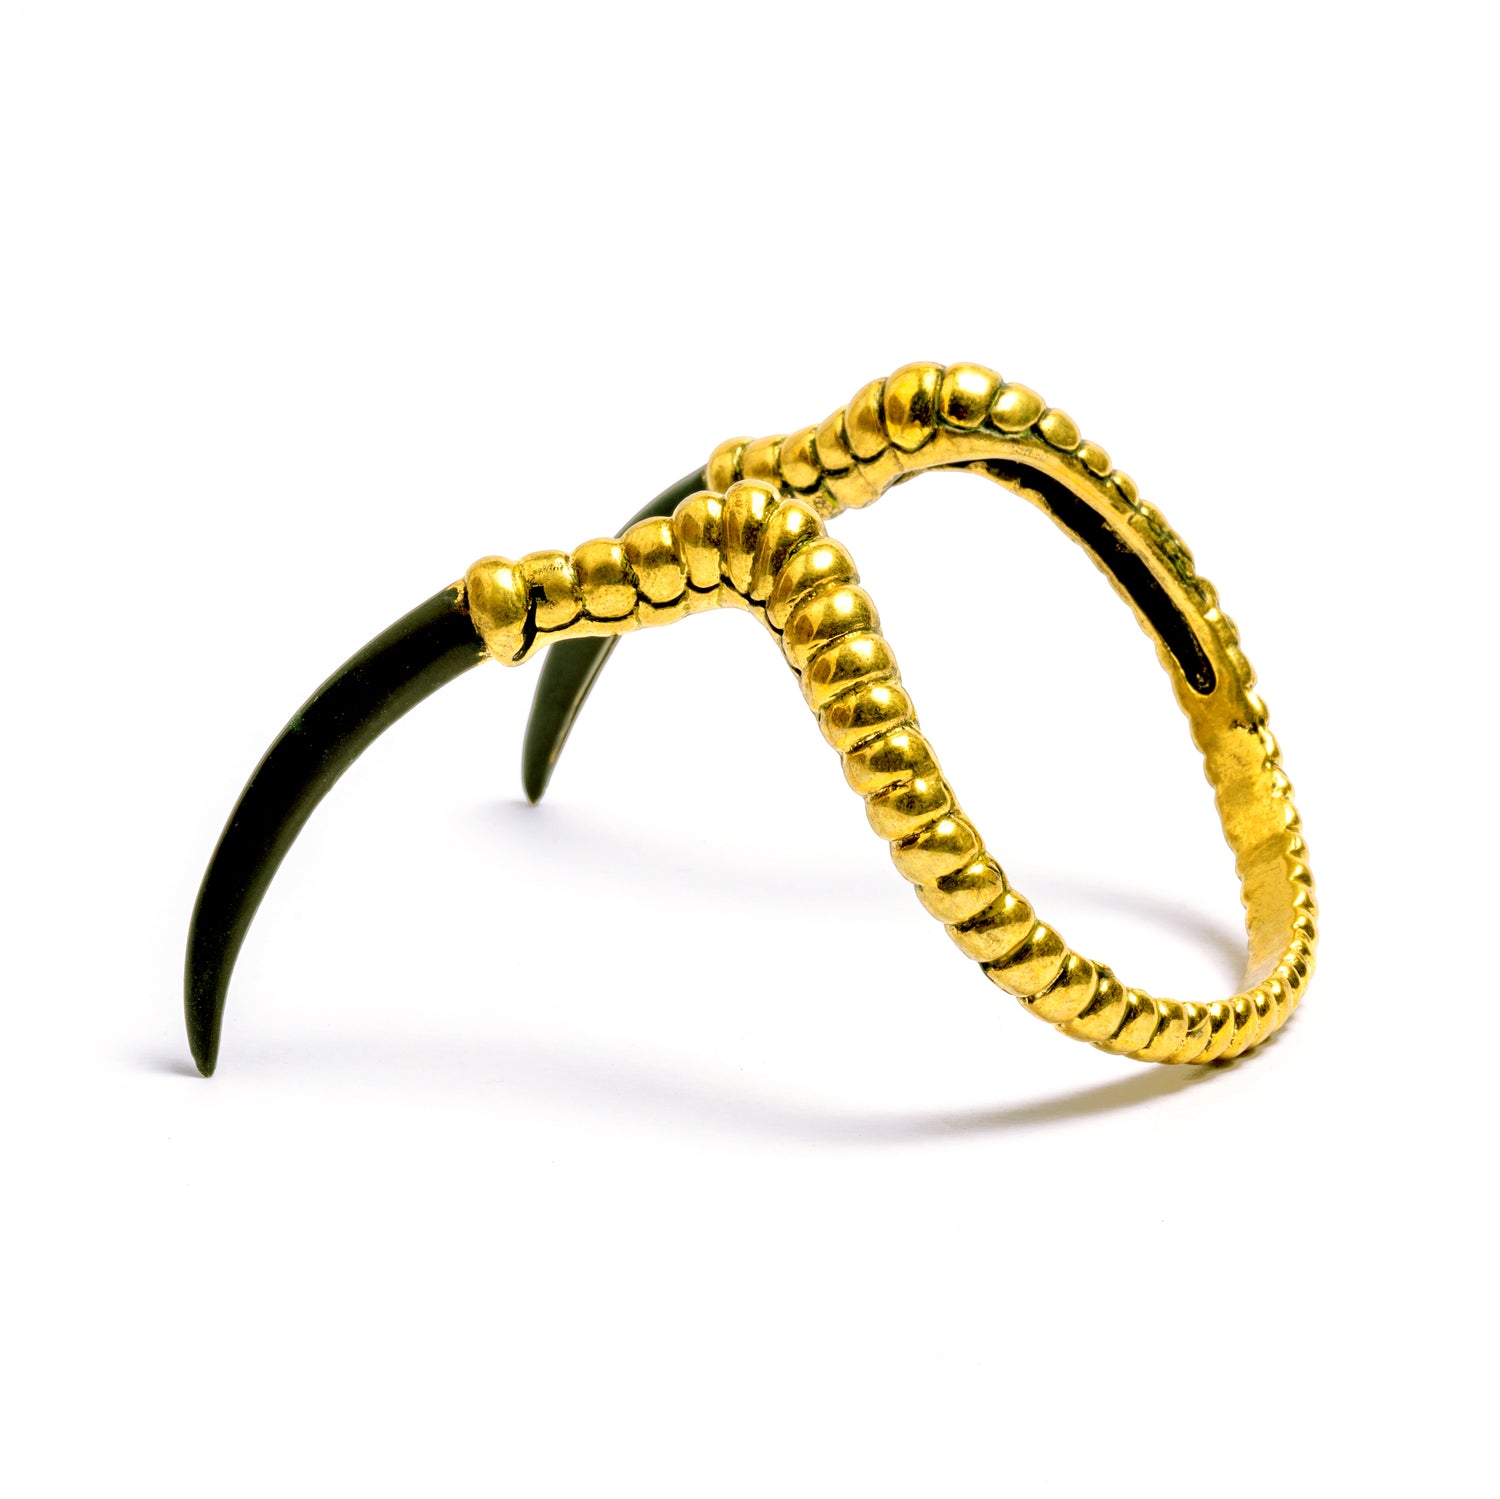 Golden-dragon-claw-bracelet_7